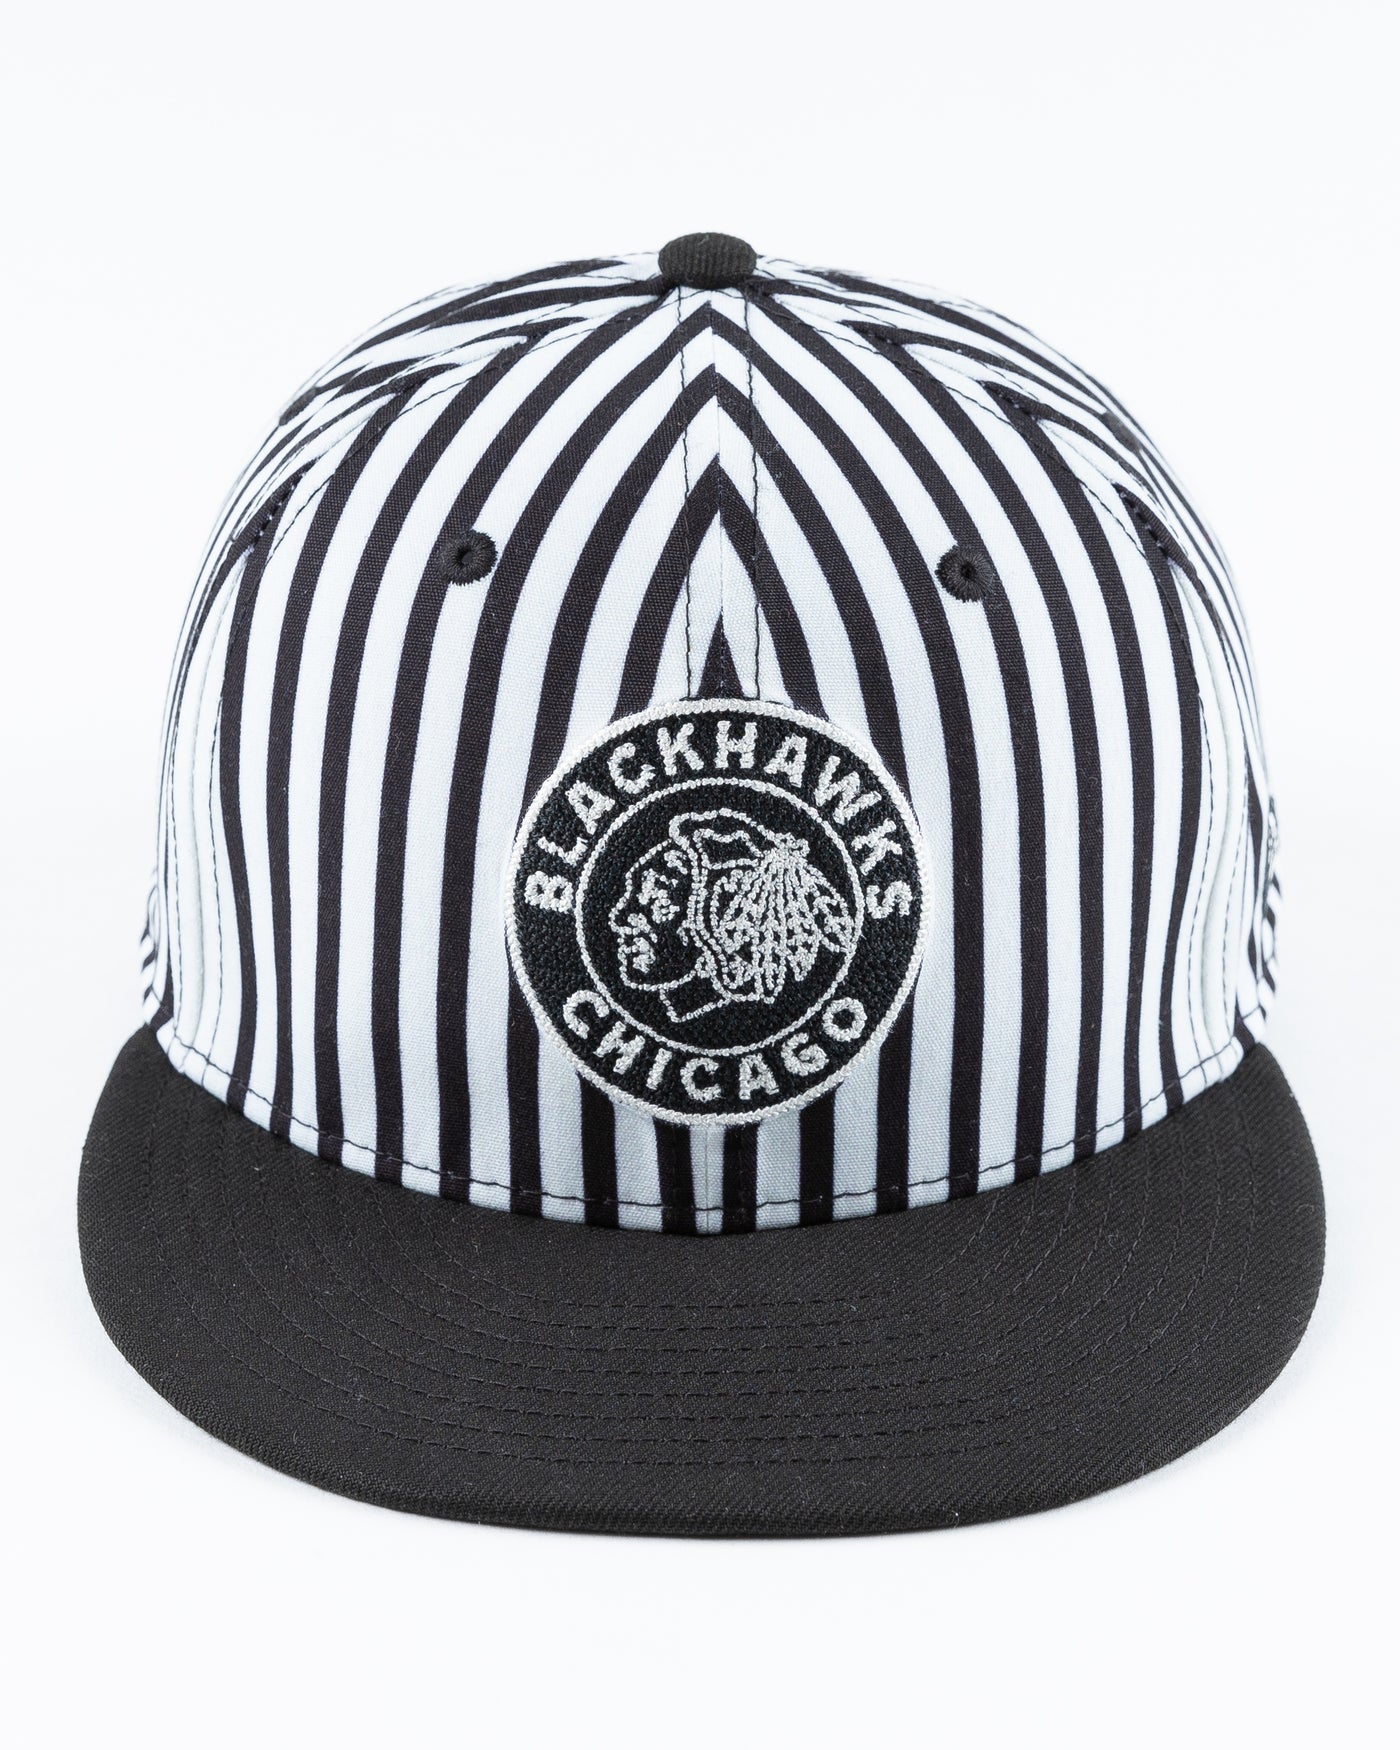 black and white zebra printed New Era snapback cap with tonal Chicago Blackhawks logo on front - front lay flat